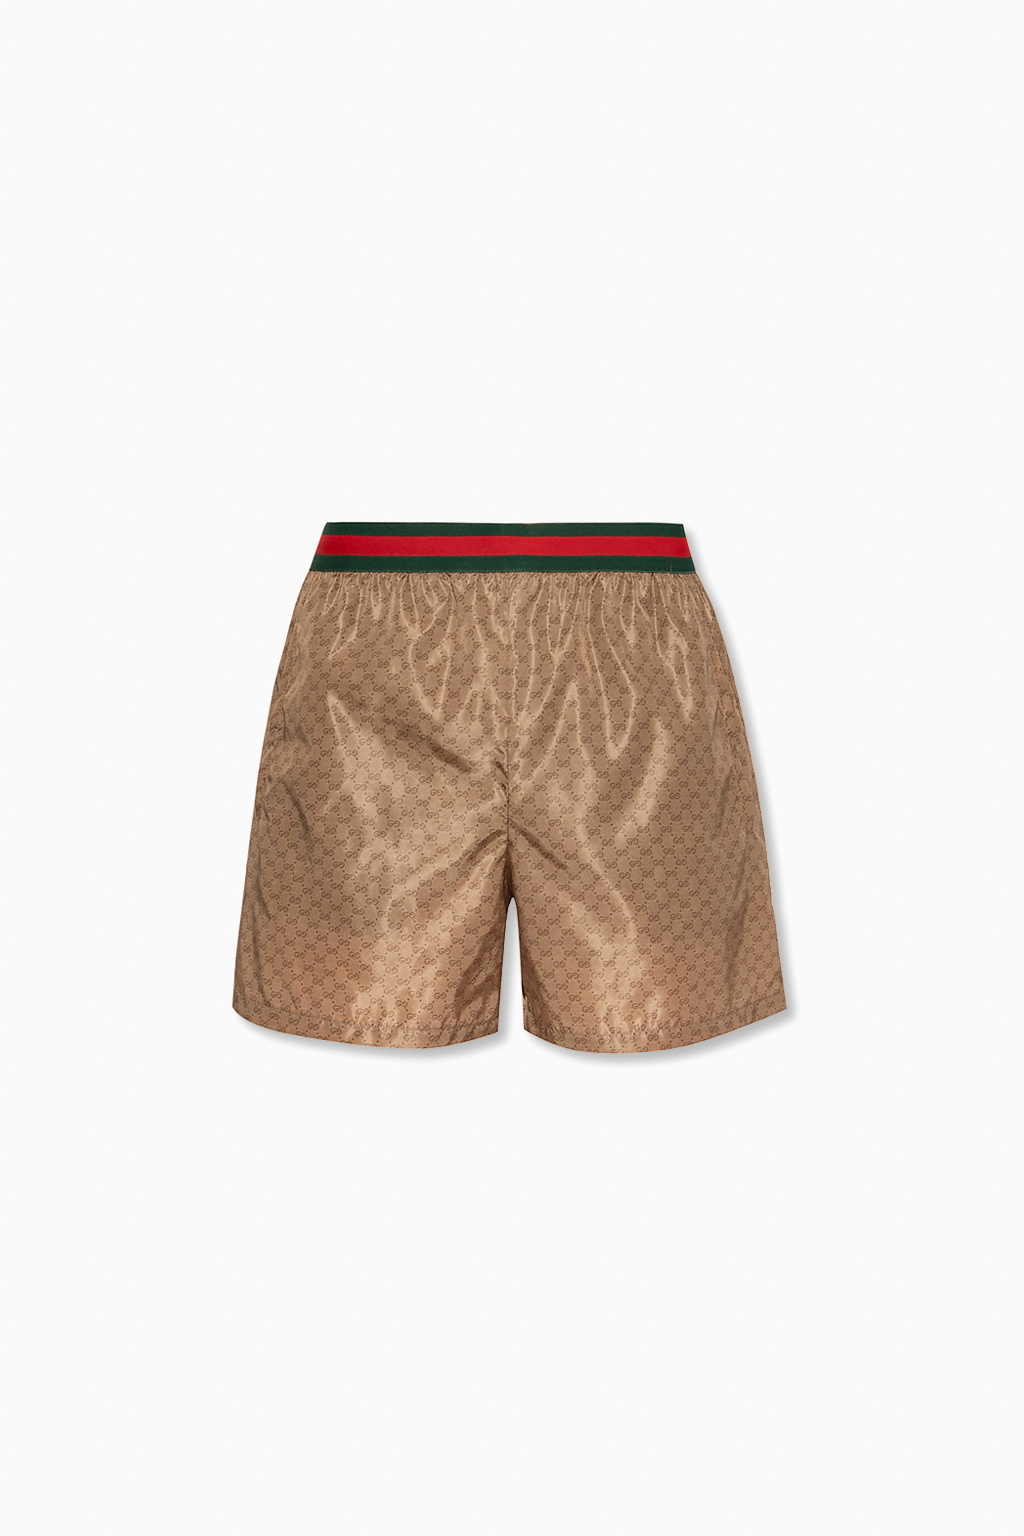 Gucci Men's Brown Shorts